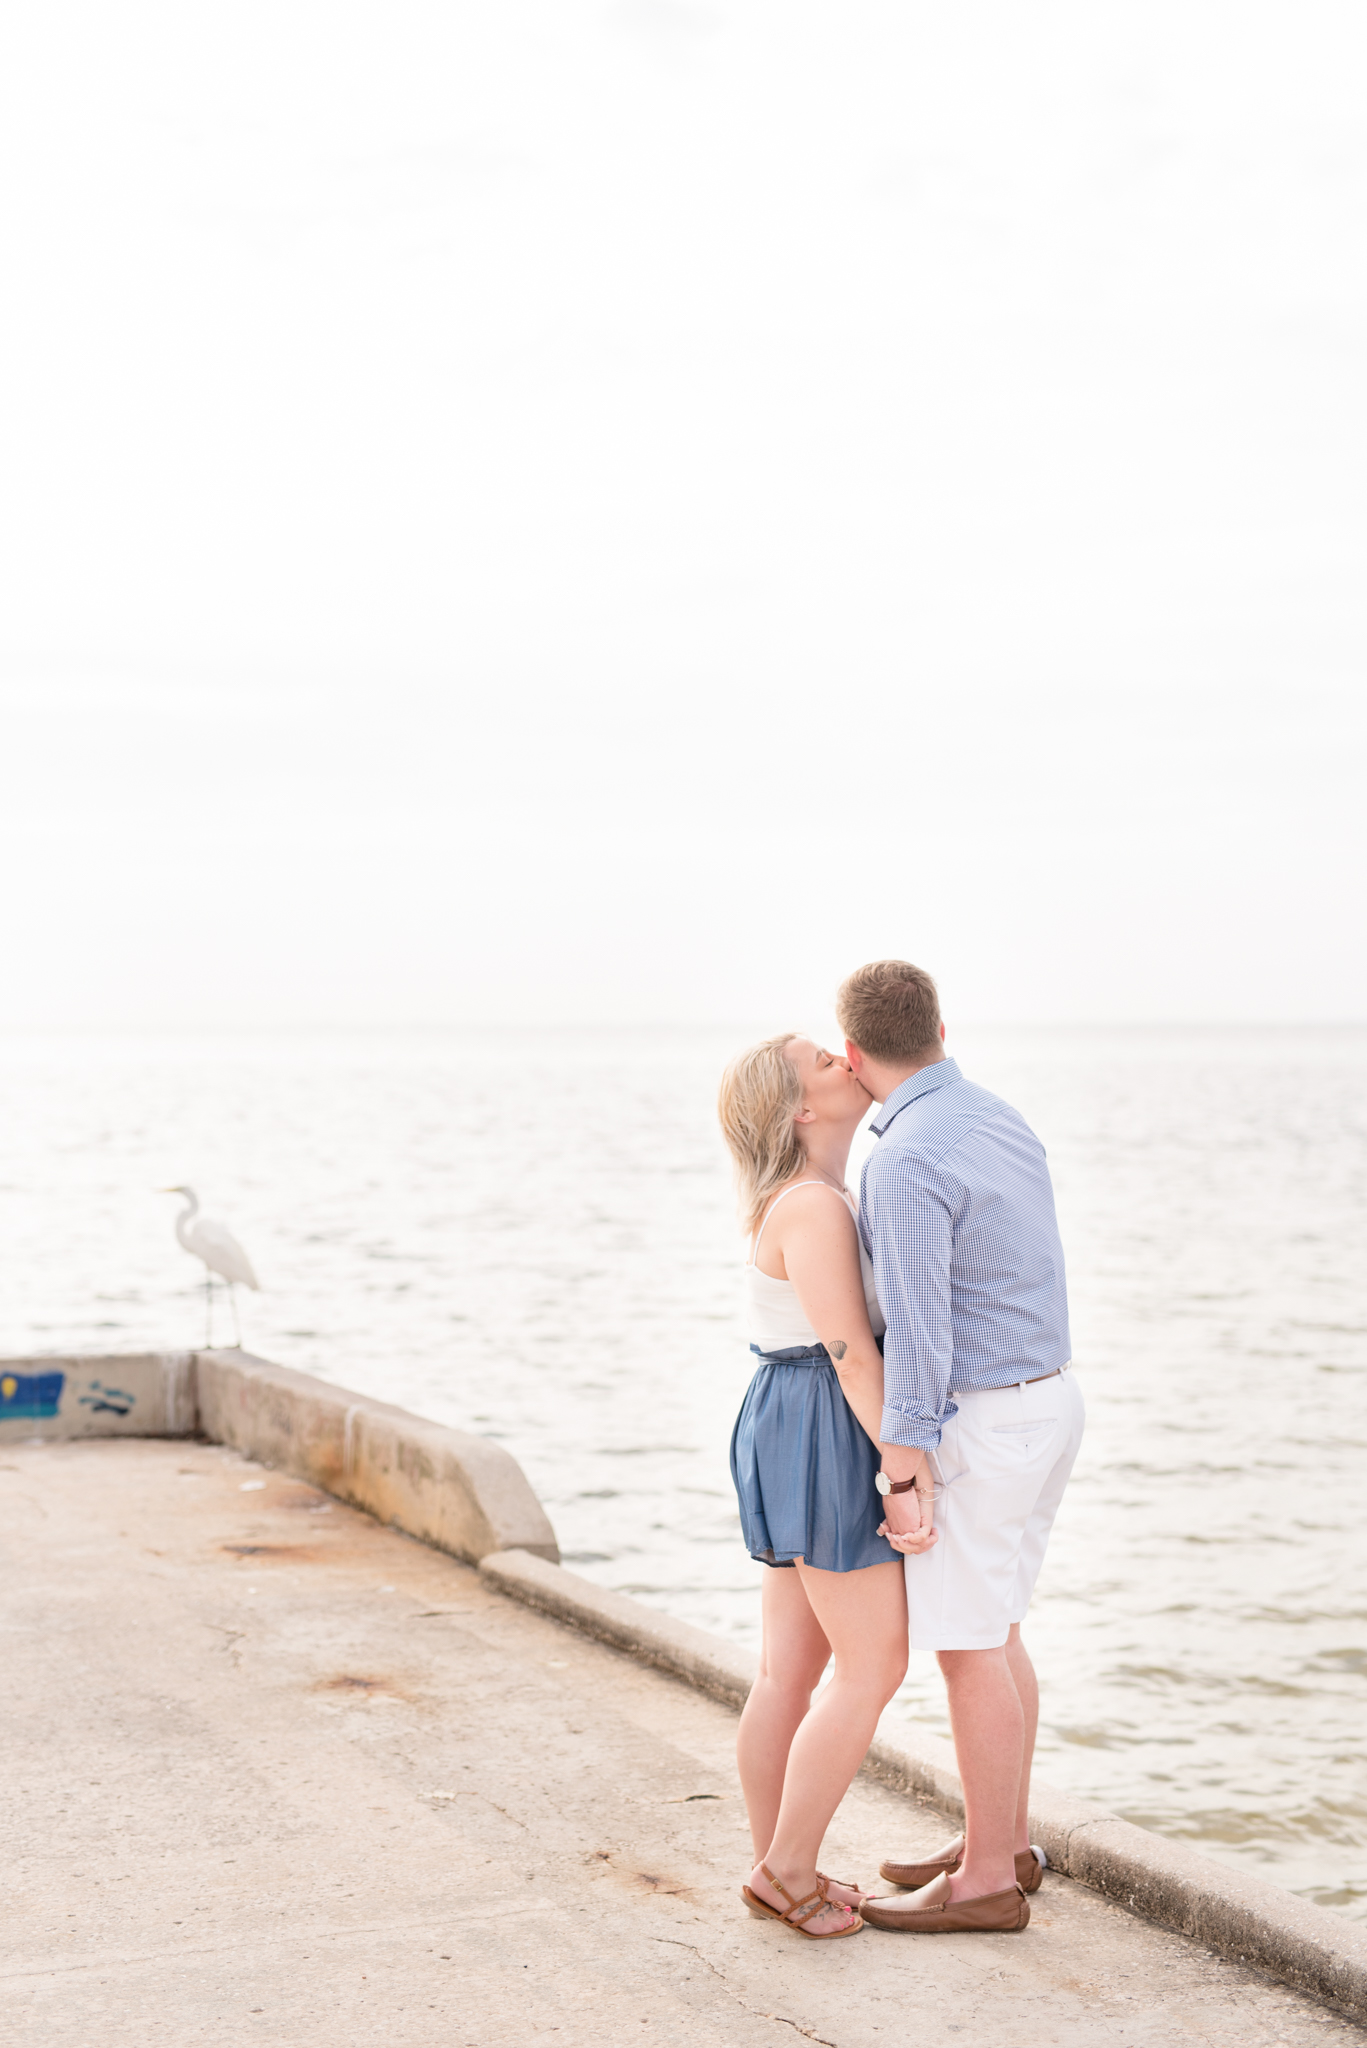 Woman kisses boyfriend on pier.